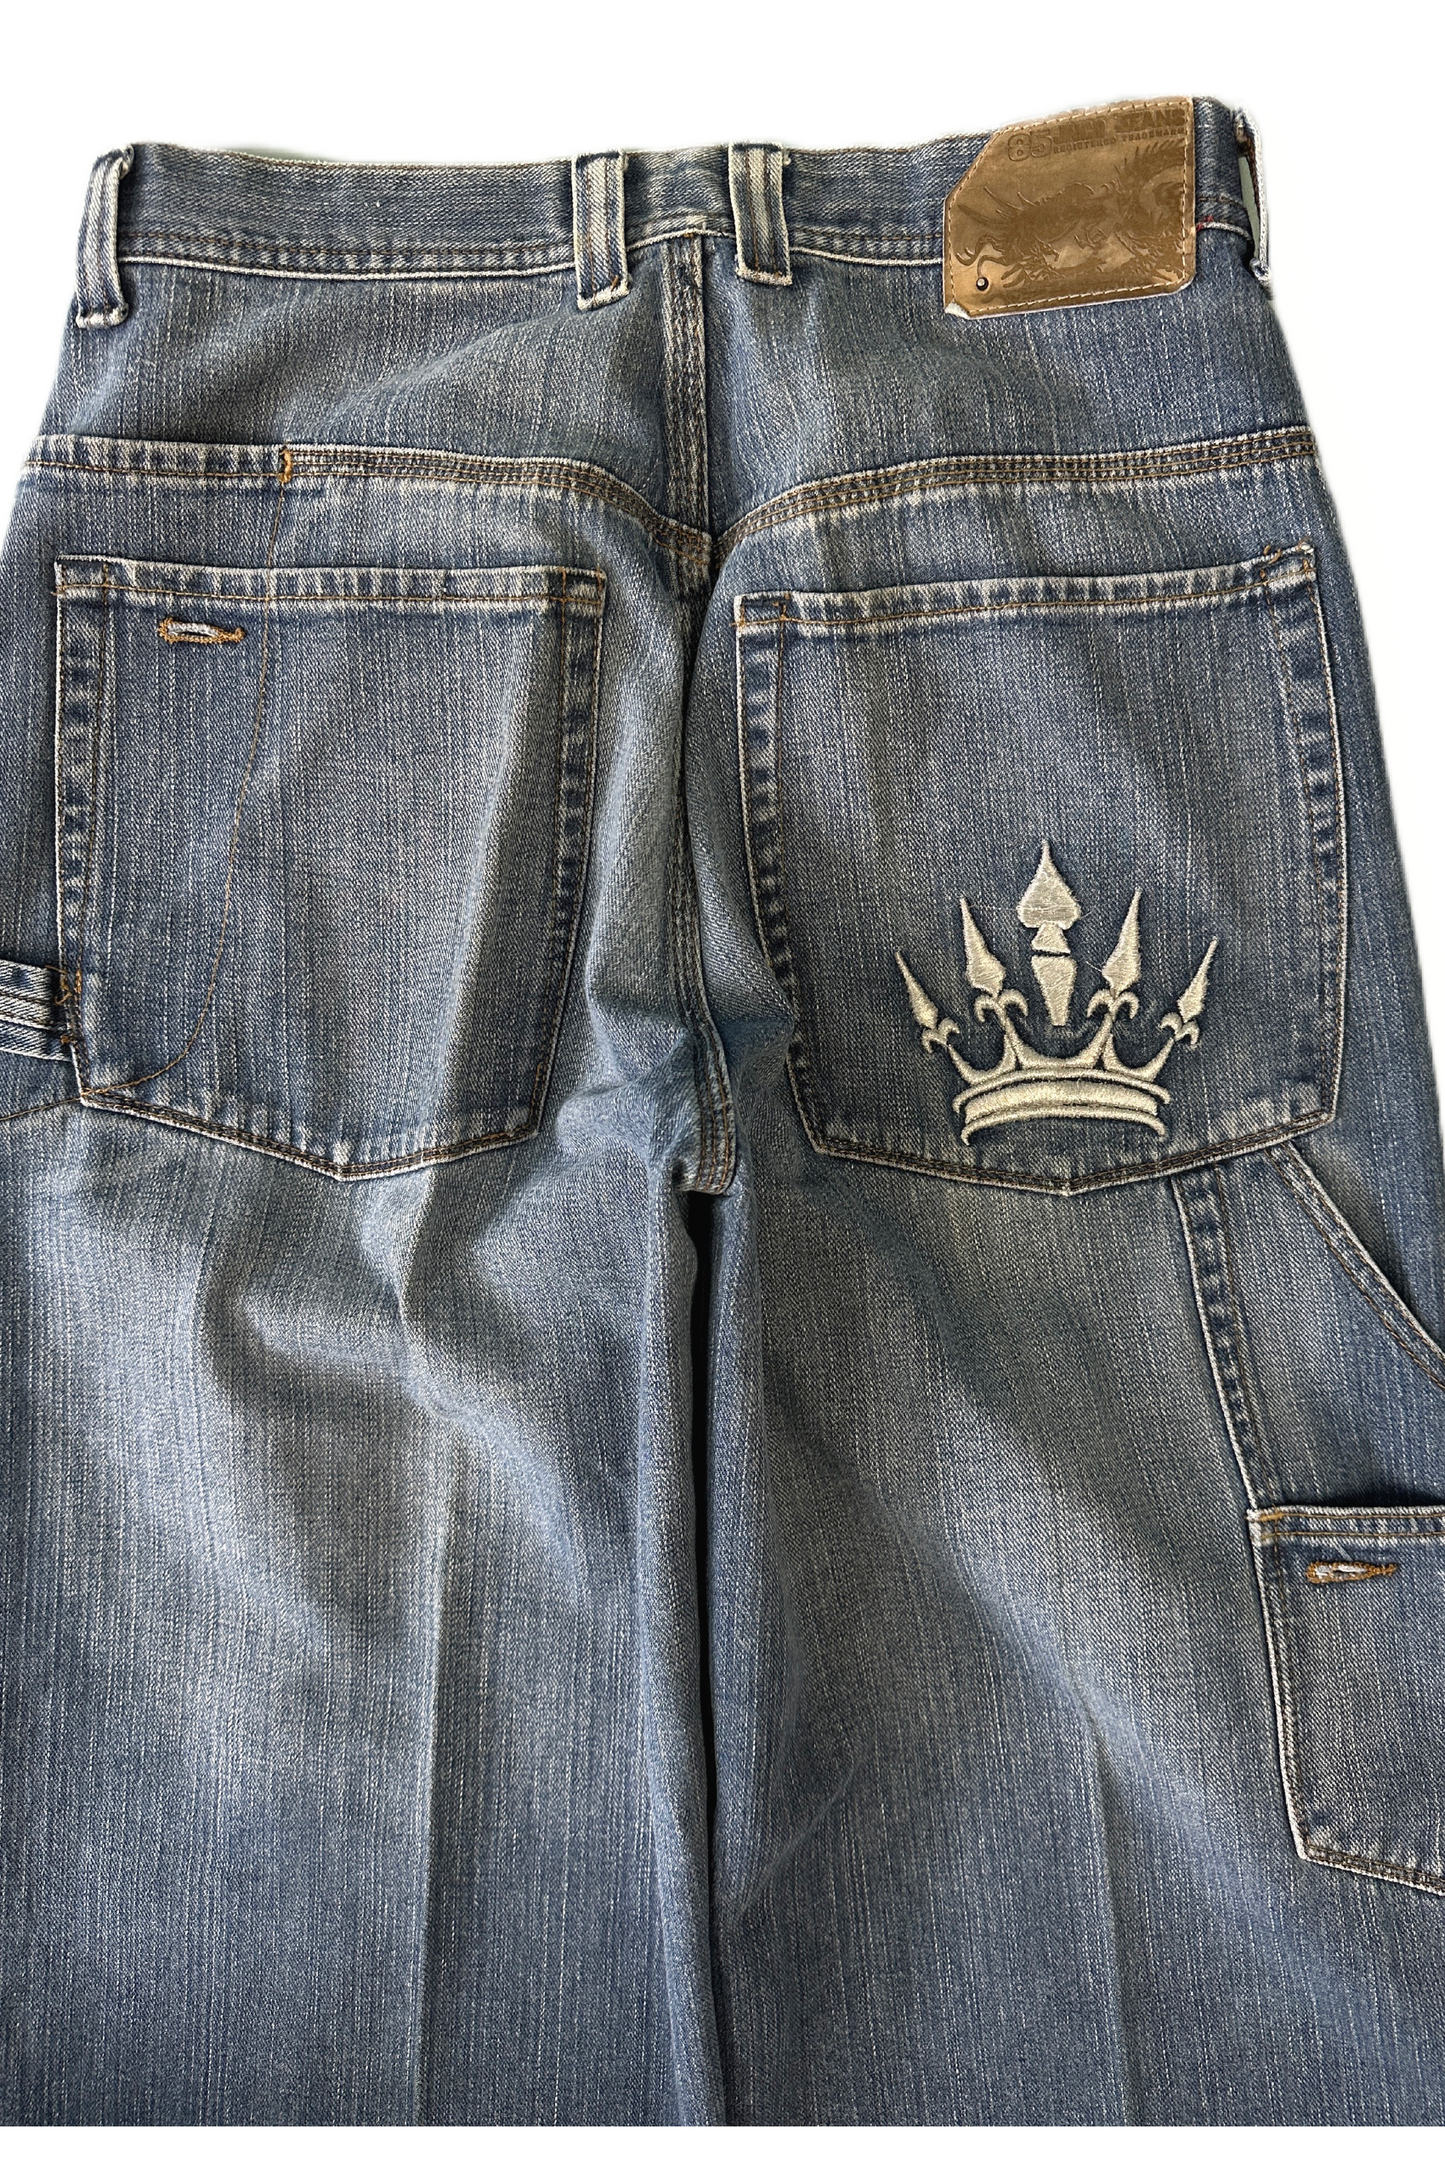 JNCO Crown Vintage Baggy Jeans - 33 x 32